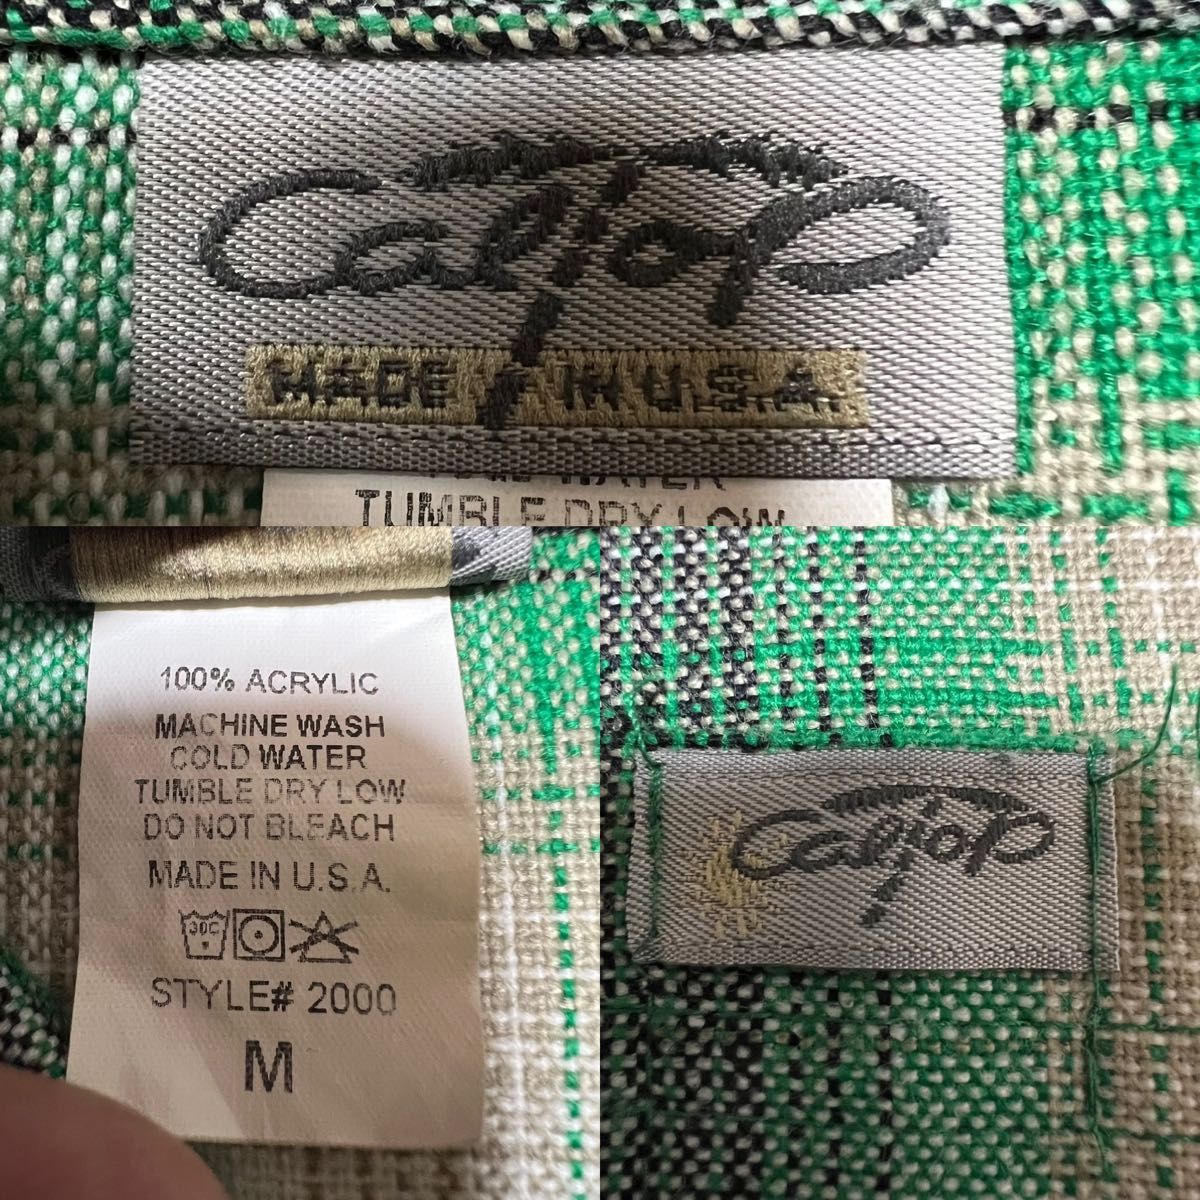 USA製　caltop ネルシャツ　半袖　グリーン系　メンズ M(大きめ) 